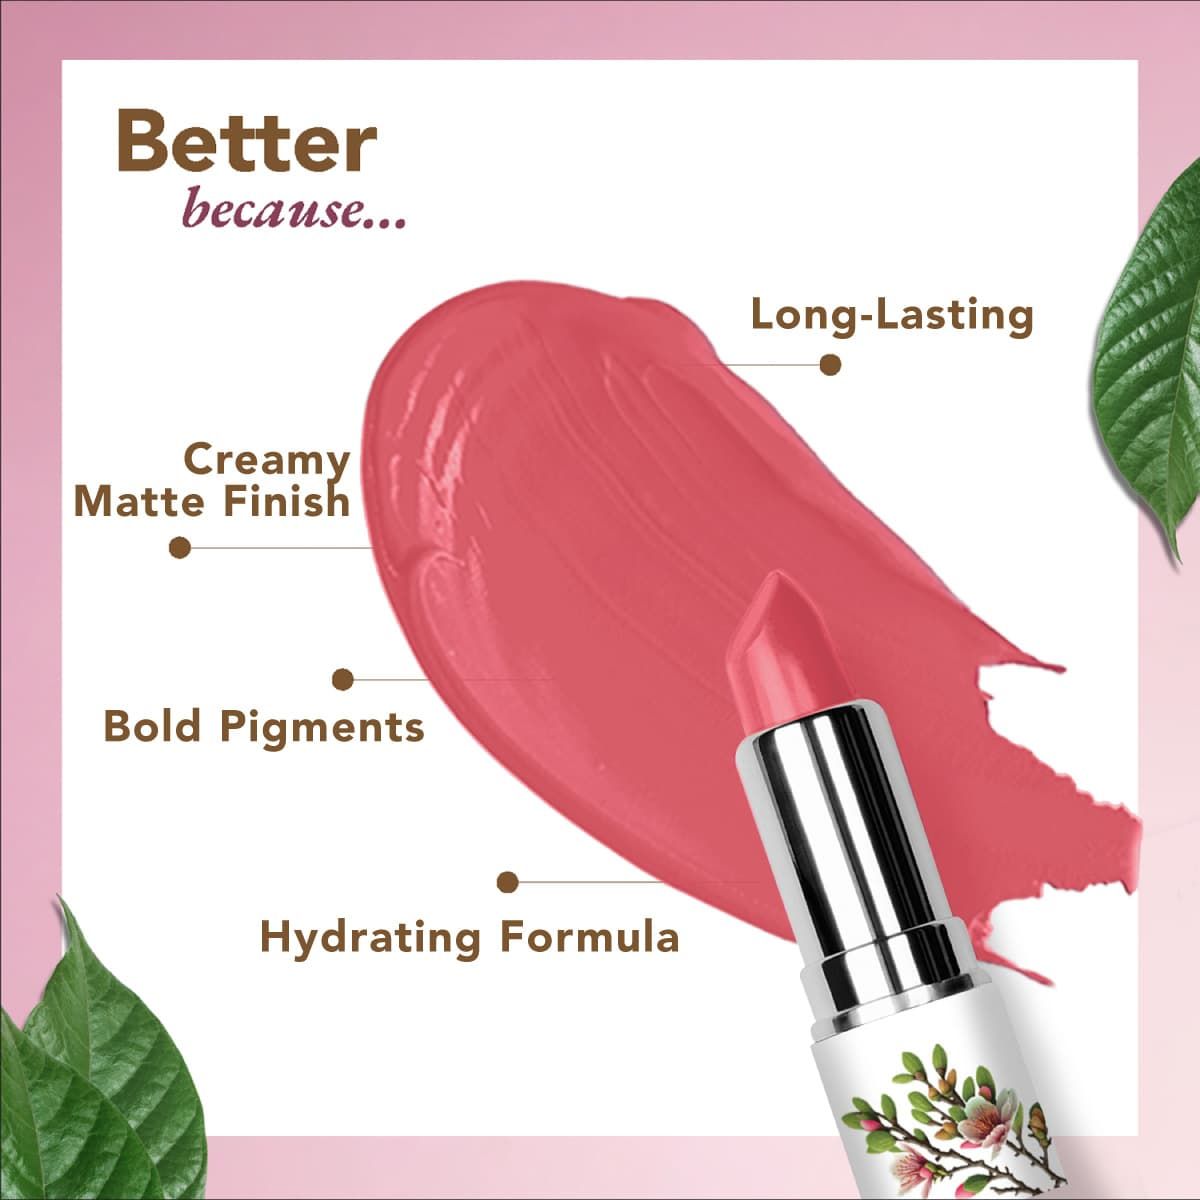 organic harvest organic moisture matte lipstick nepal soft chestnut